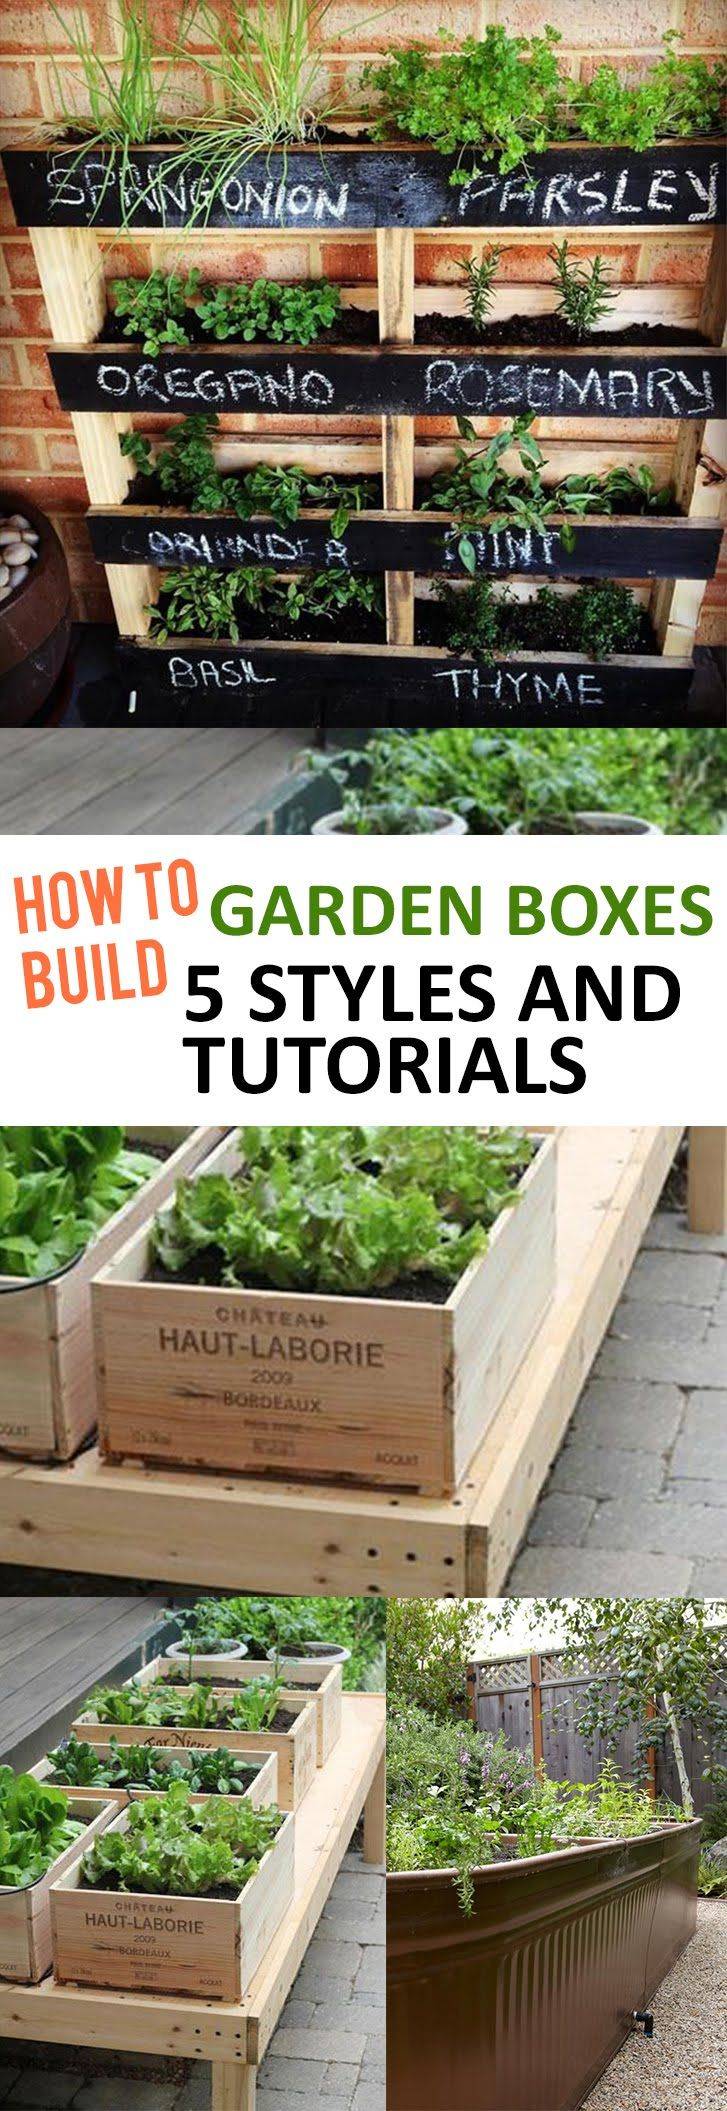 Brilliant Gardening Ideas